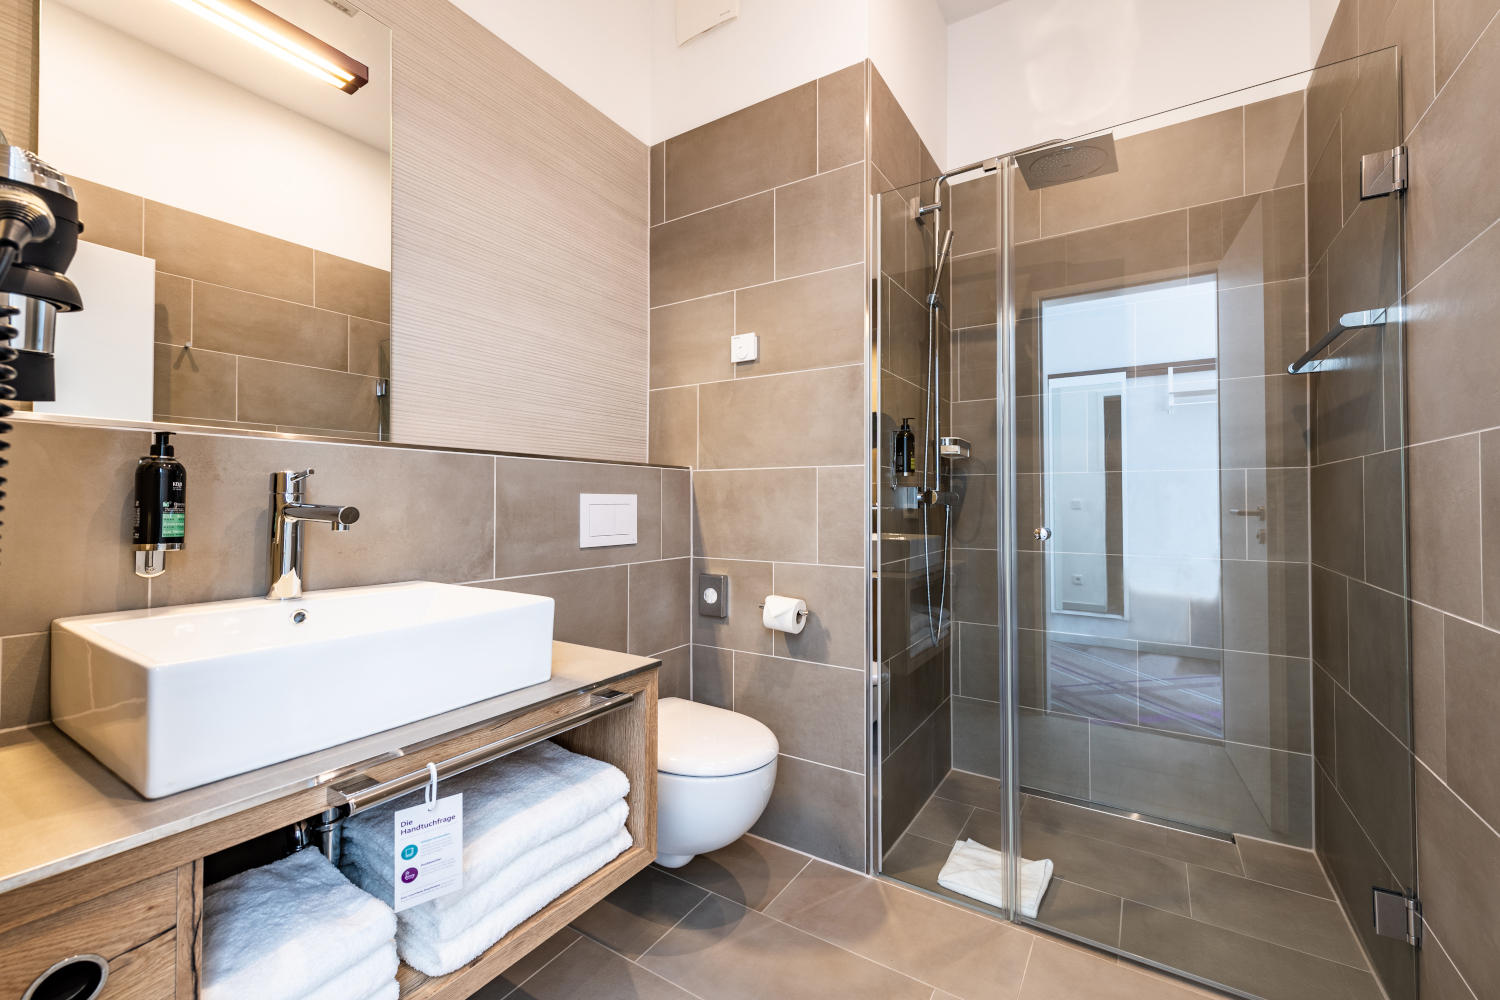 Premier Inn Wuppertal City Centre bathroom with shower